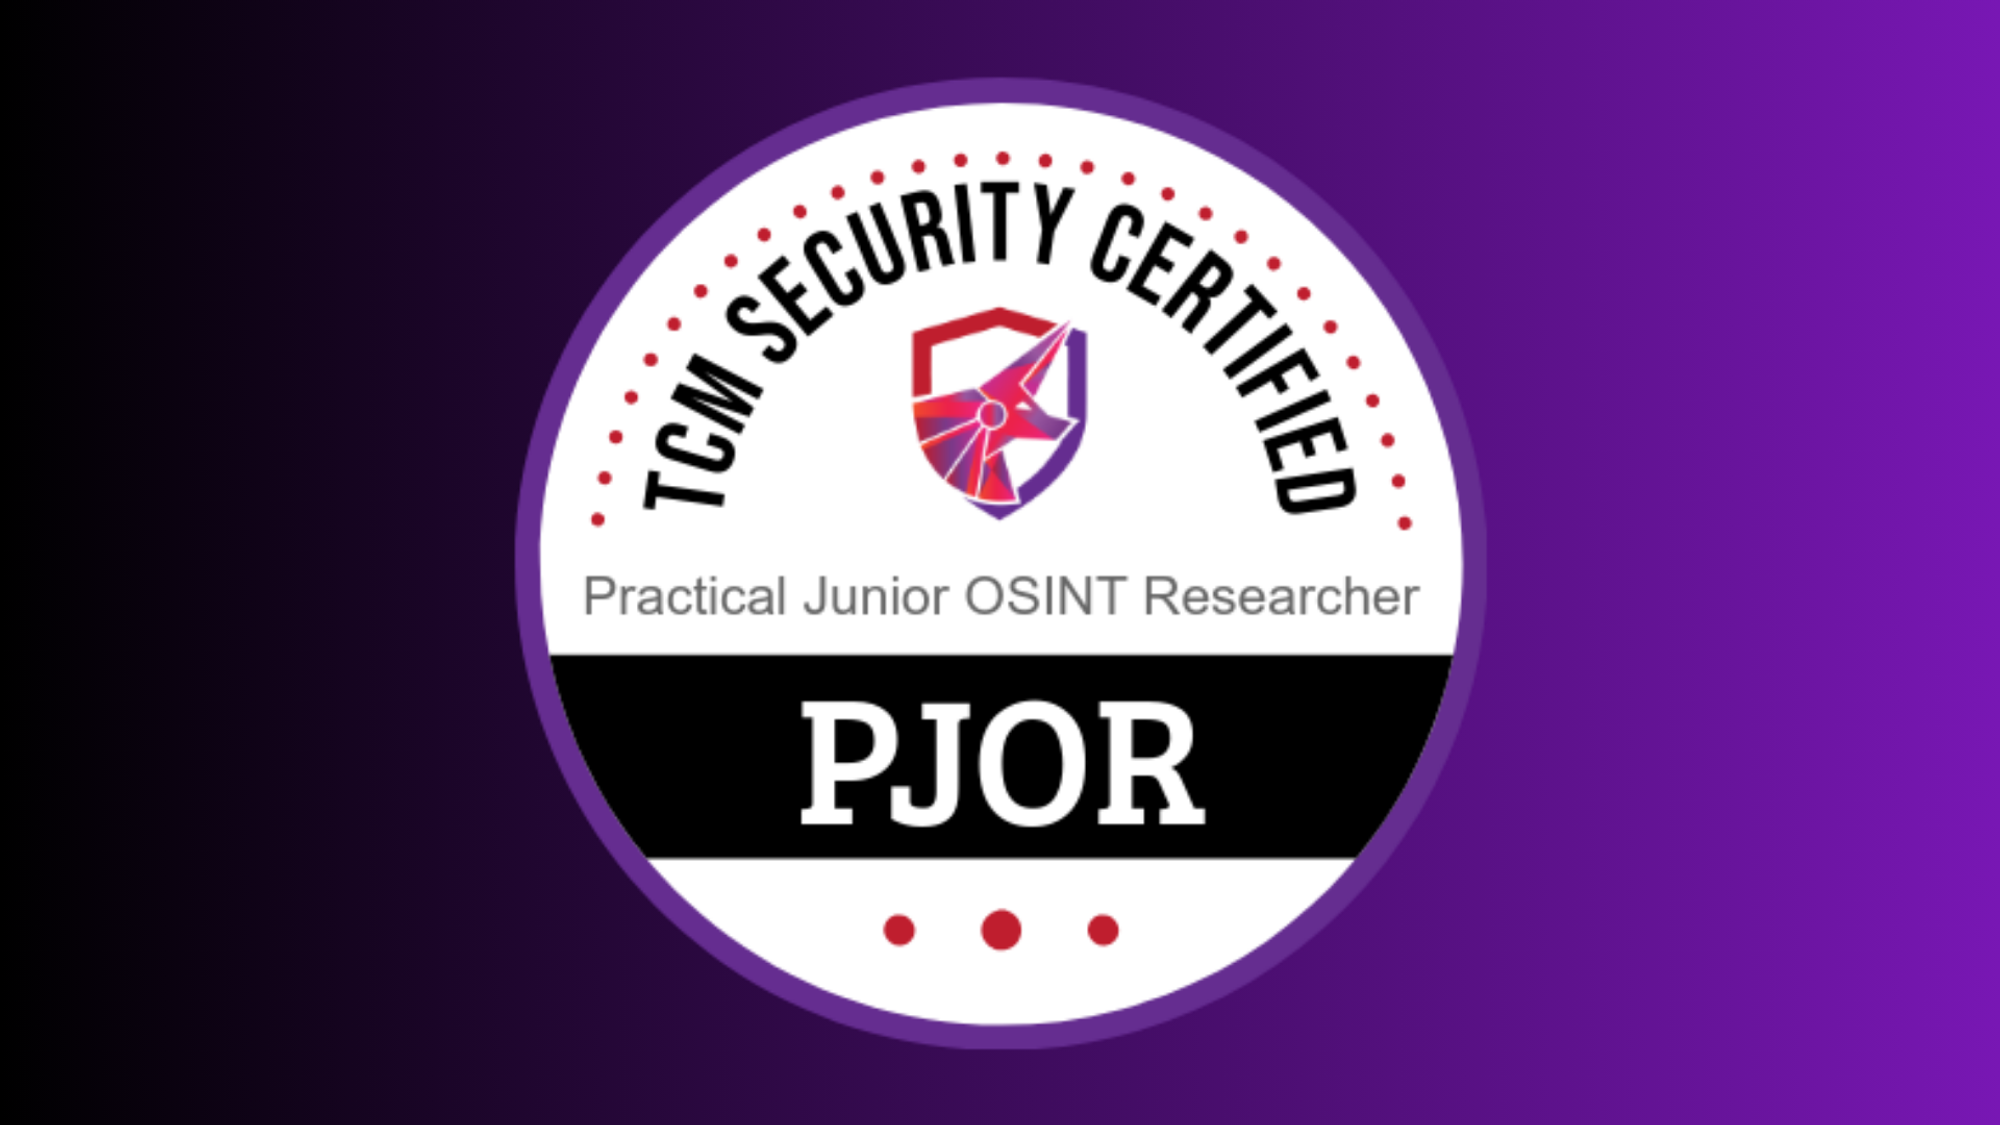 PJOR Certification Review & Advice